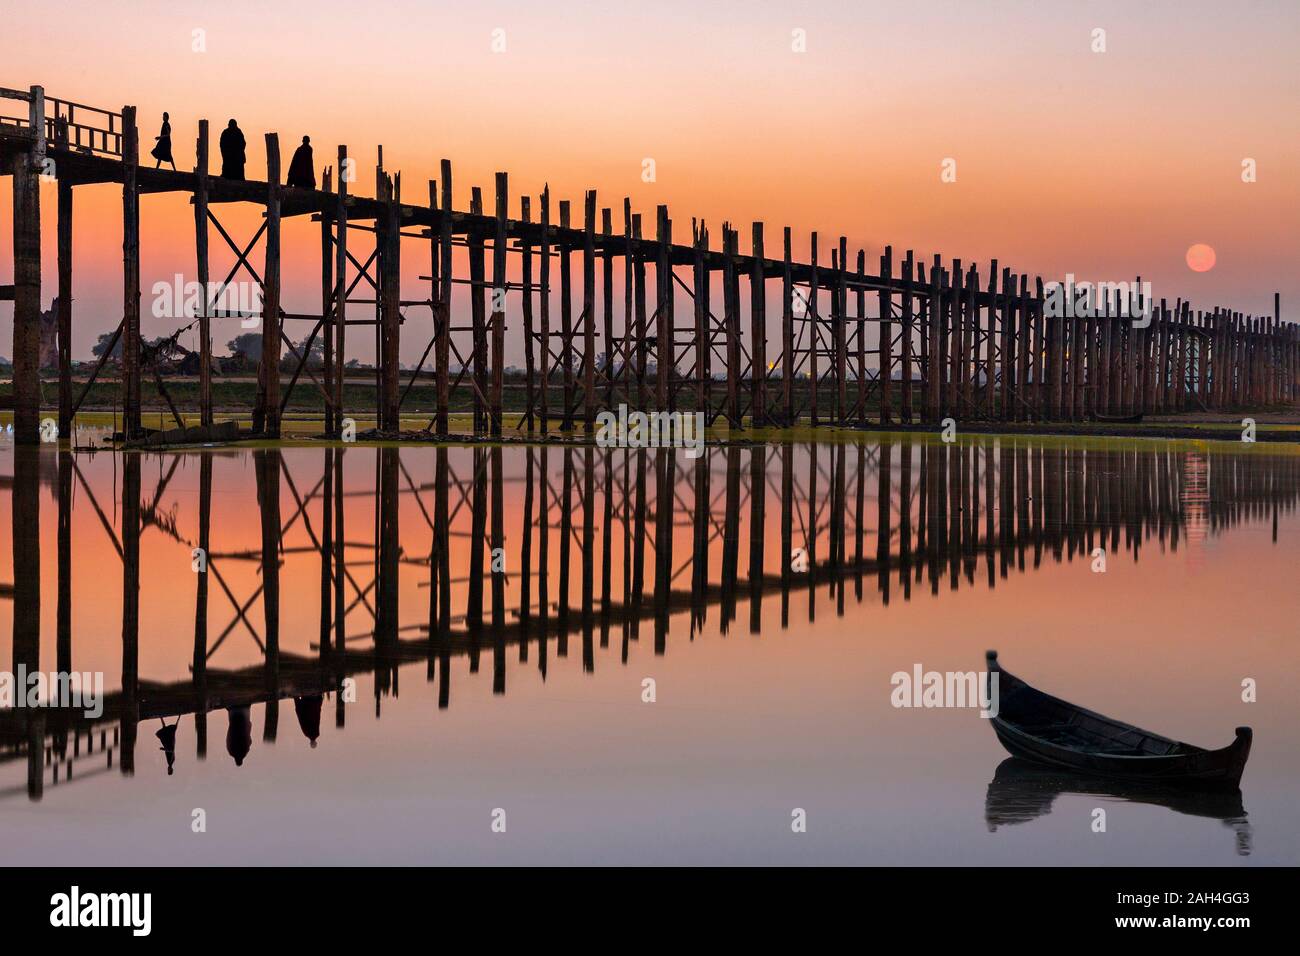 U Bein Bridge in silhouette at the sunset in Mandalay, Myanmar Stock Photo